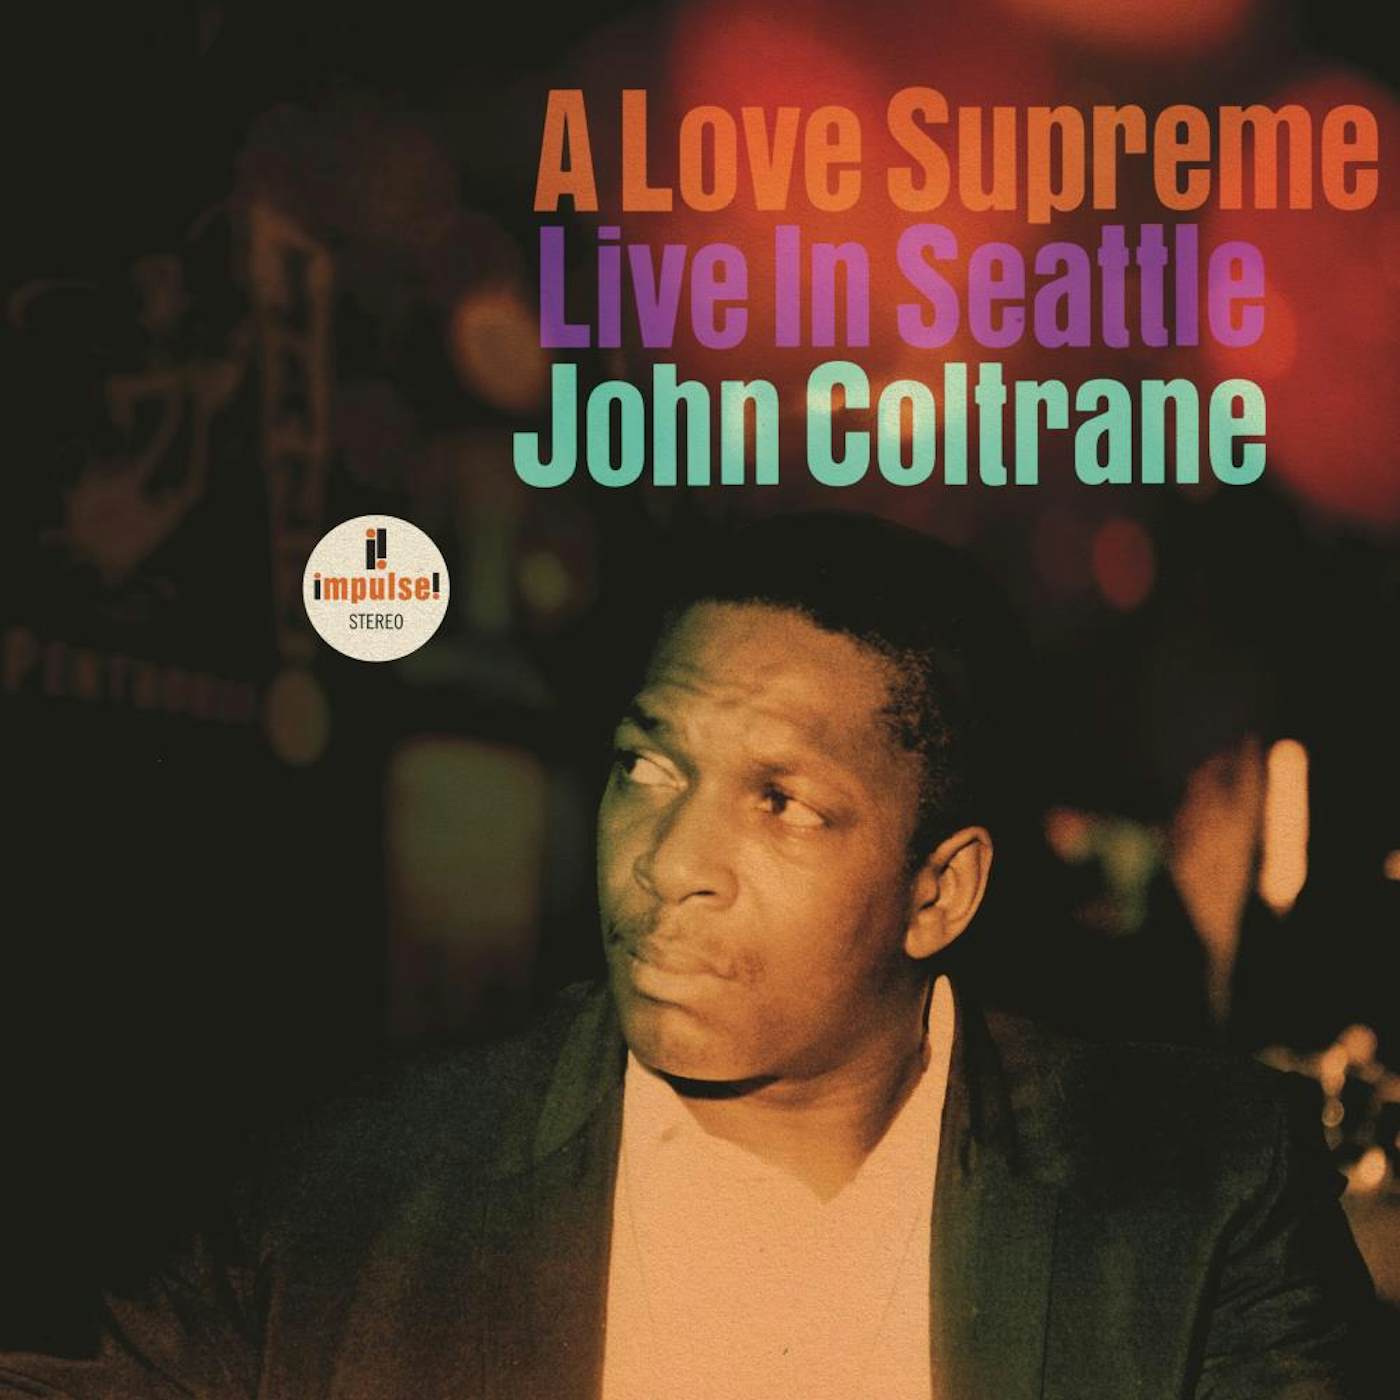 Supreme John Coltrane A Love Regular Jean Blue